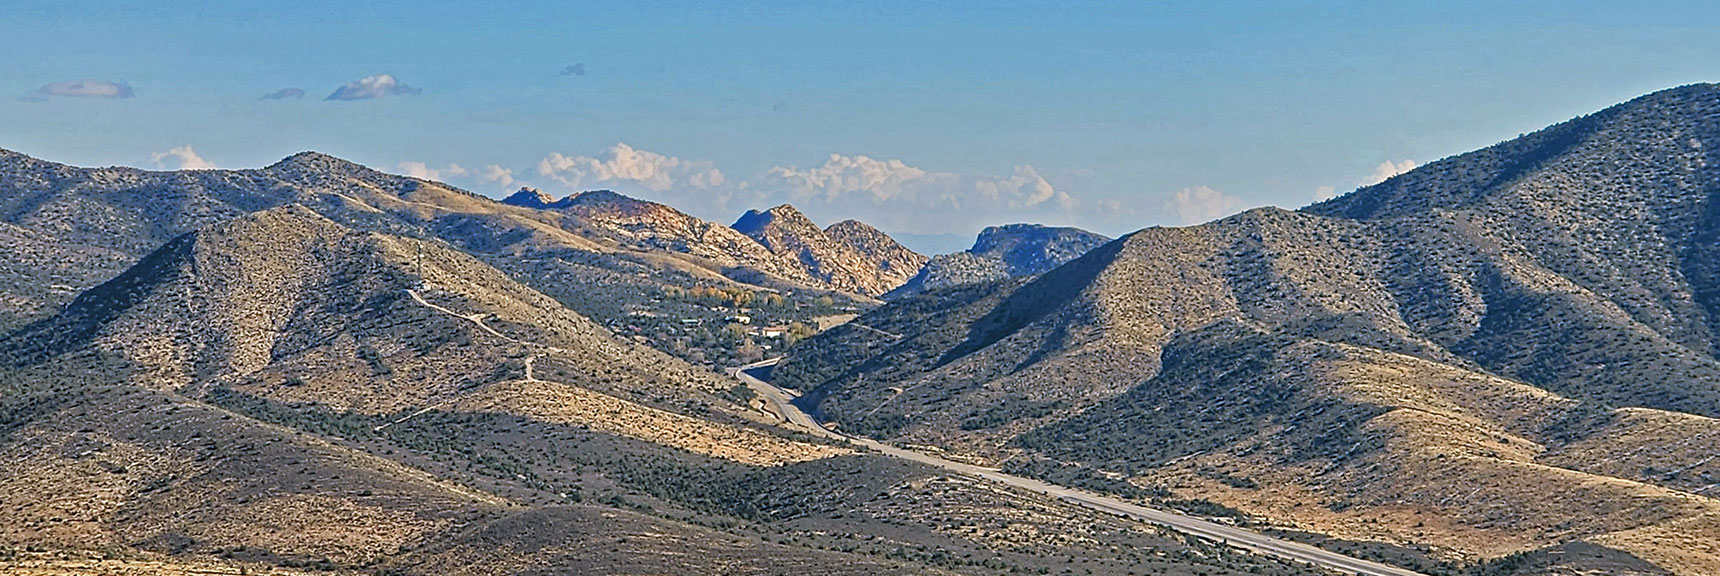 Highway 160 Toward Las Vegas Crossing Ridge at Mountain Spring. | Landmark Bluff Summit | Lovell Canyon, Nevada